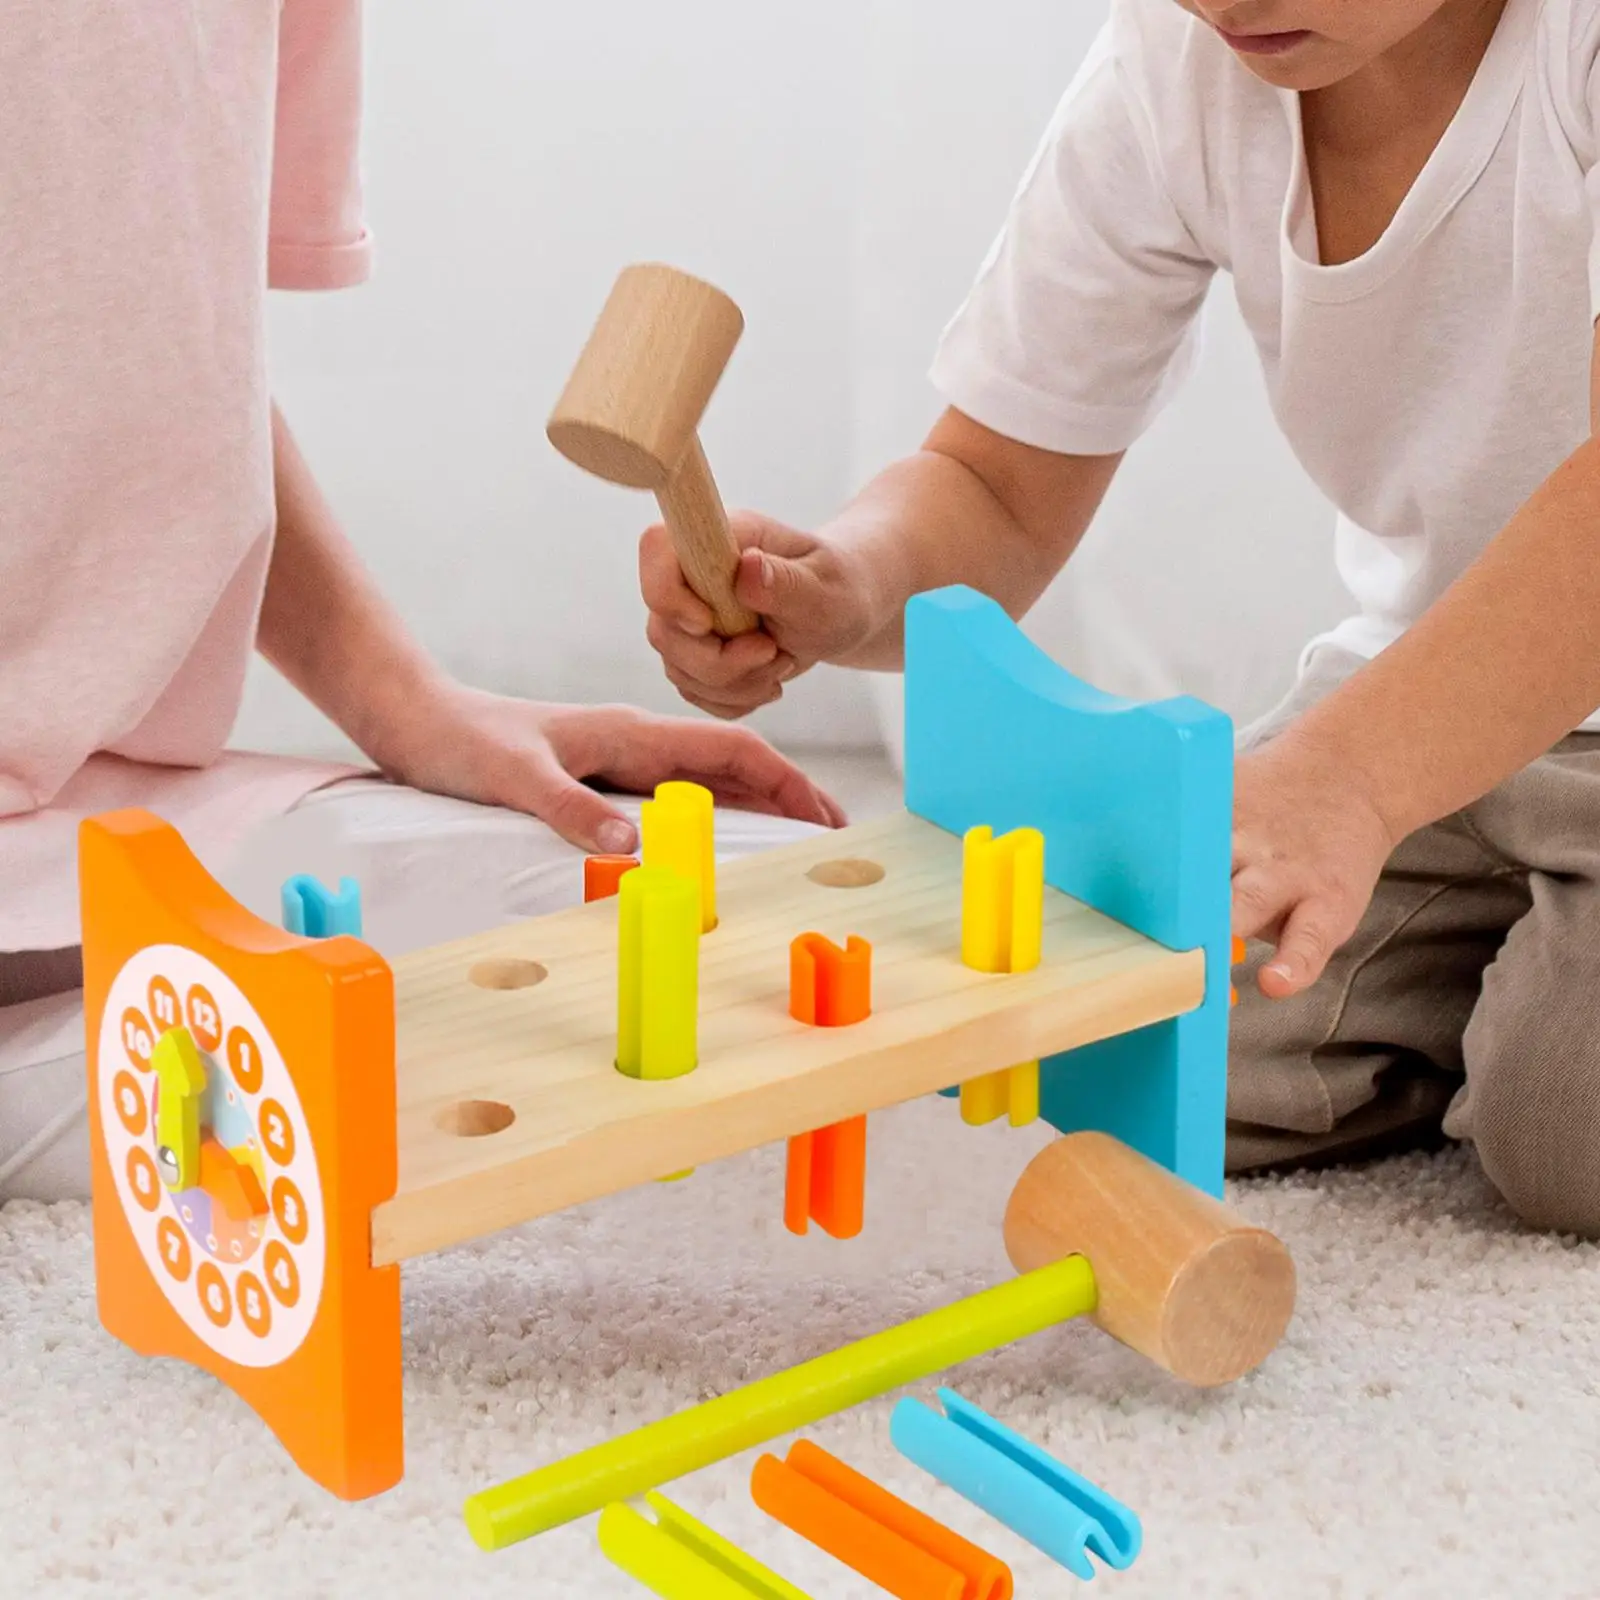 

Pound Bench Wood Toy Educational Toy Develops Fine Motor Skills Hitting Peg Game for Birthday Gift Boys Girls Preschool Kids